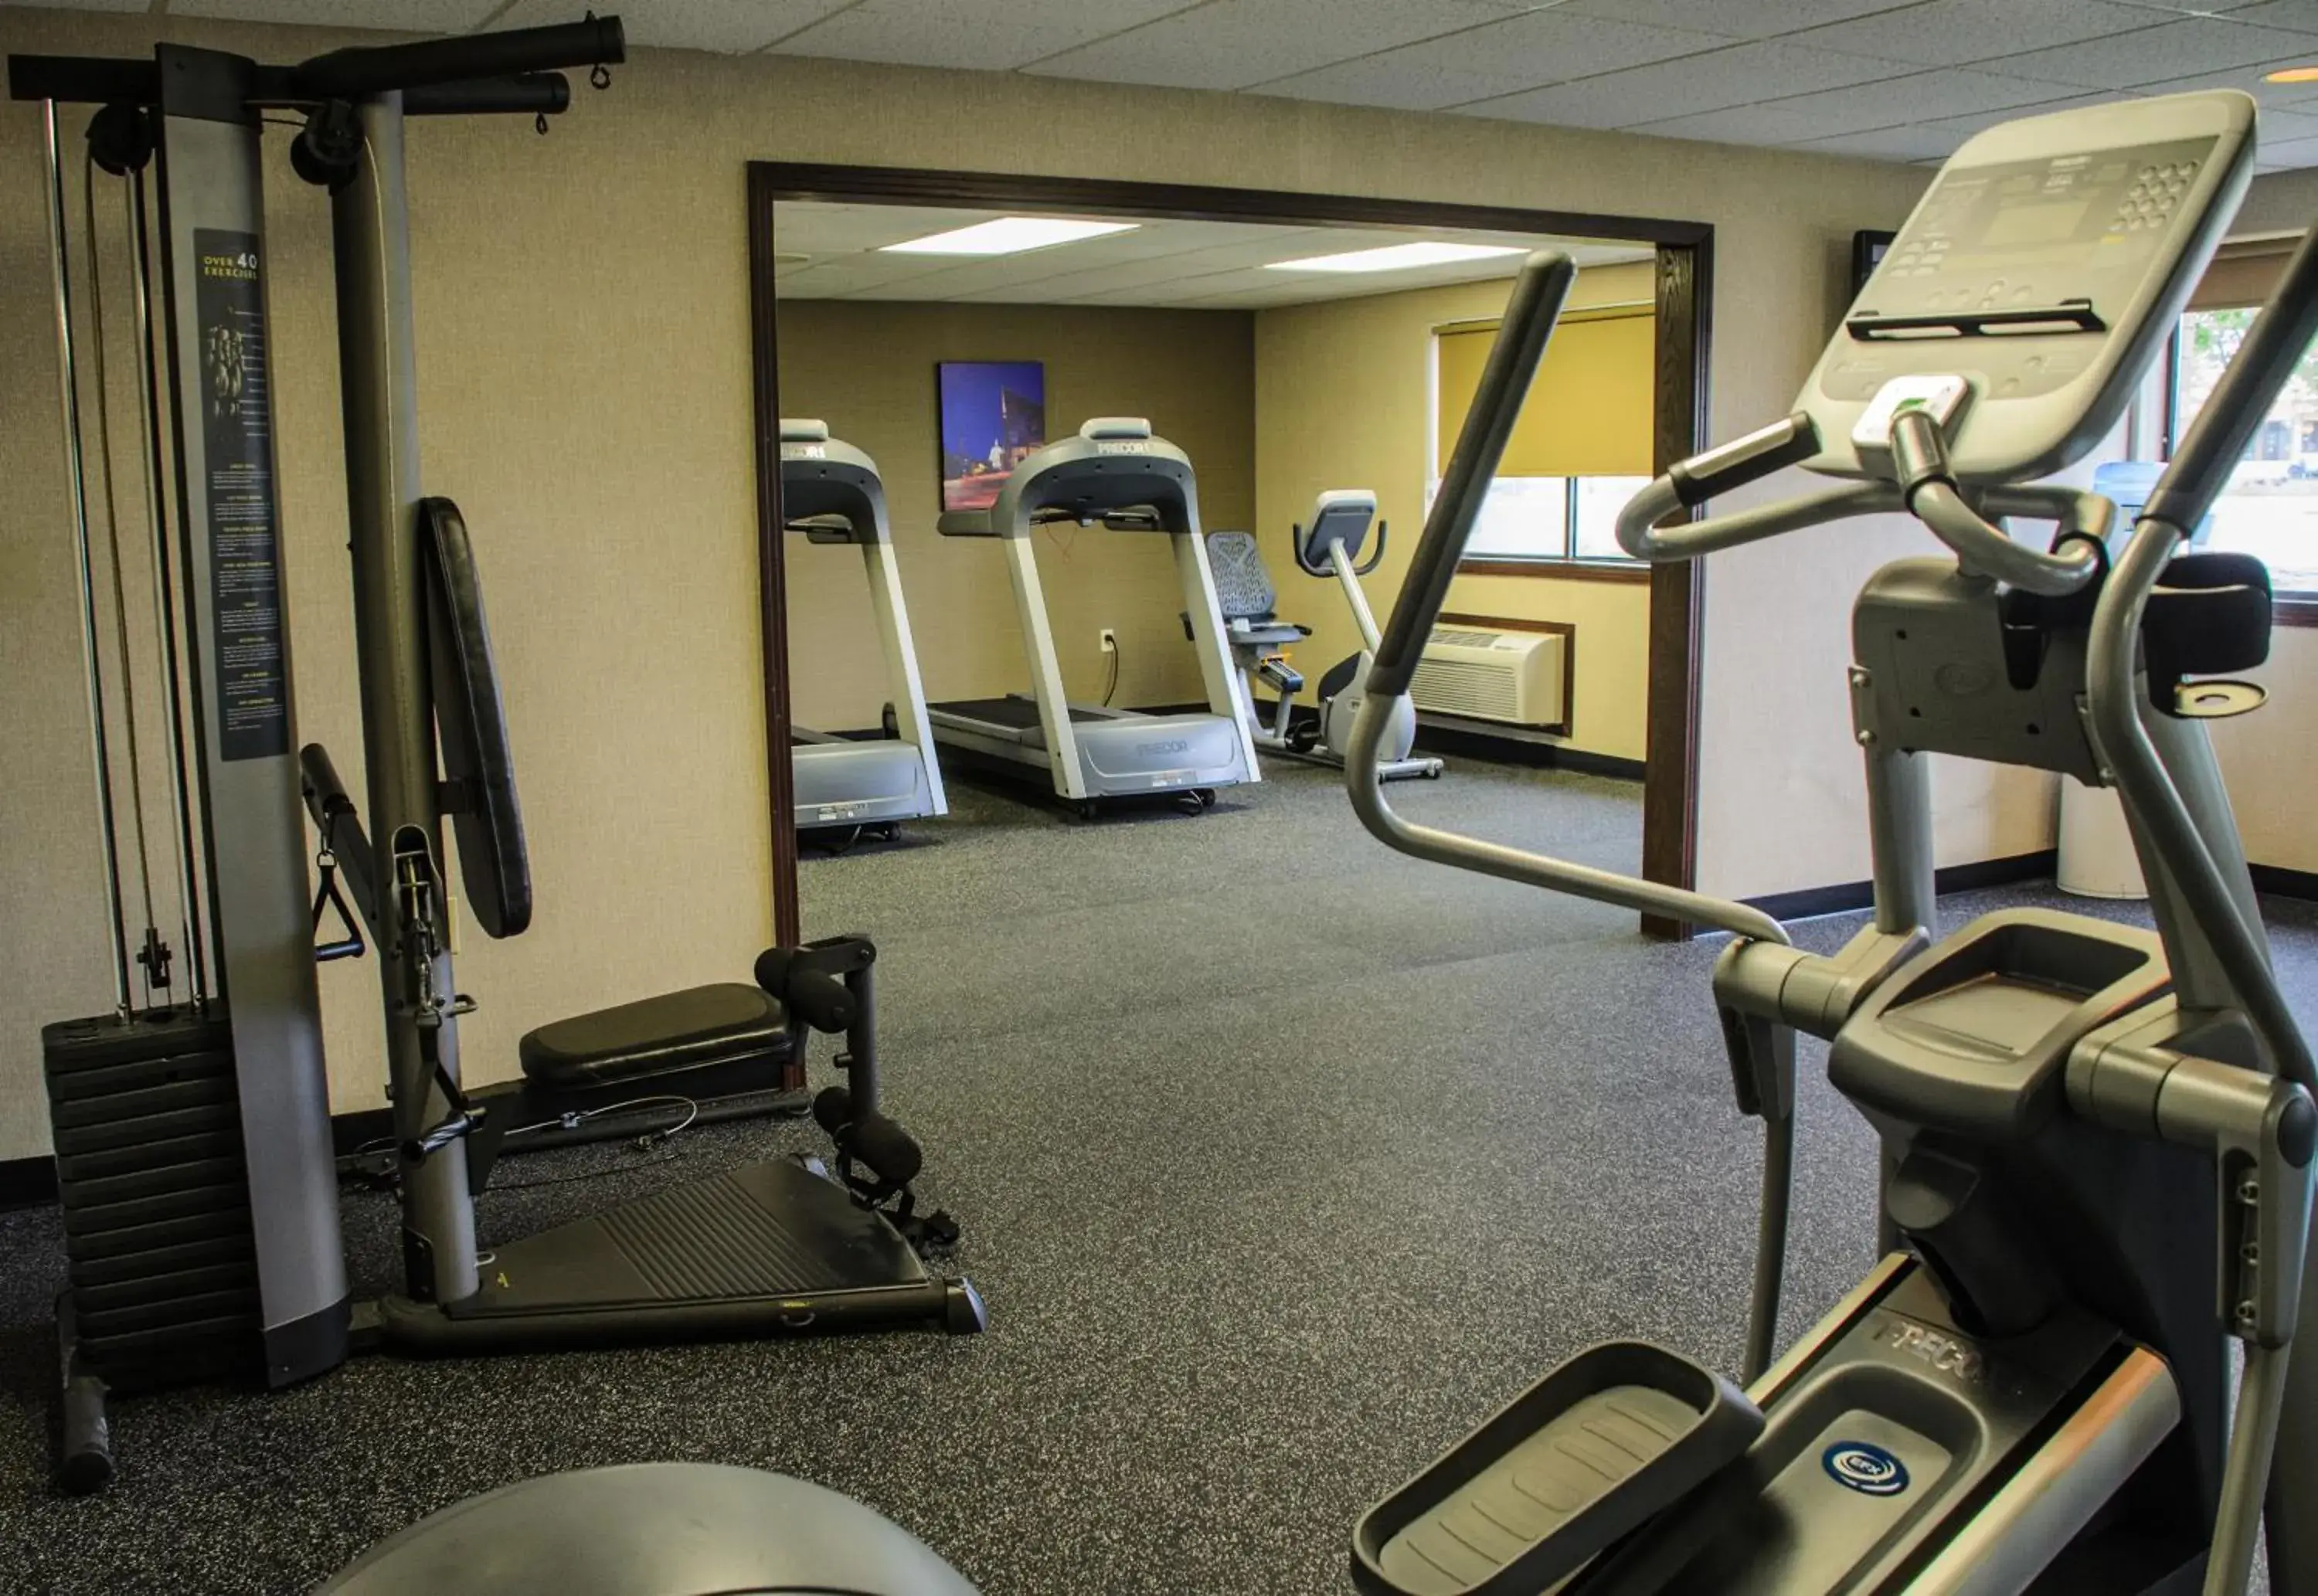 Fitness centre/facilities, Fitness Center/Facilities in Radisson Hotel Madison